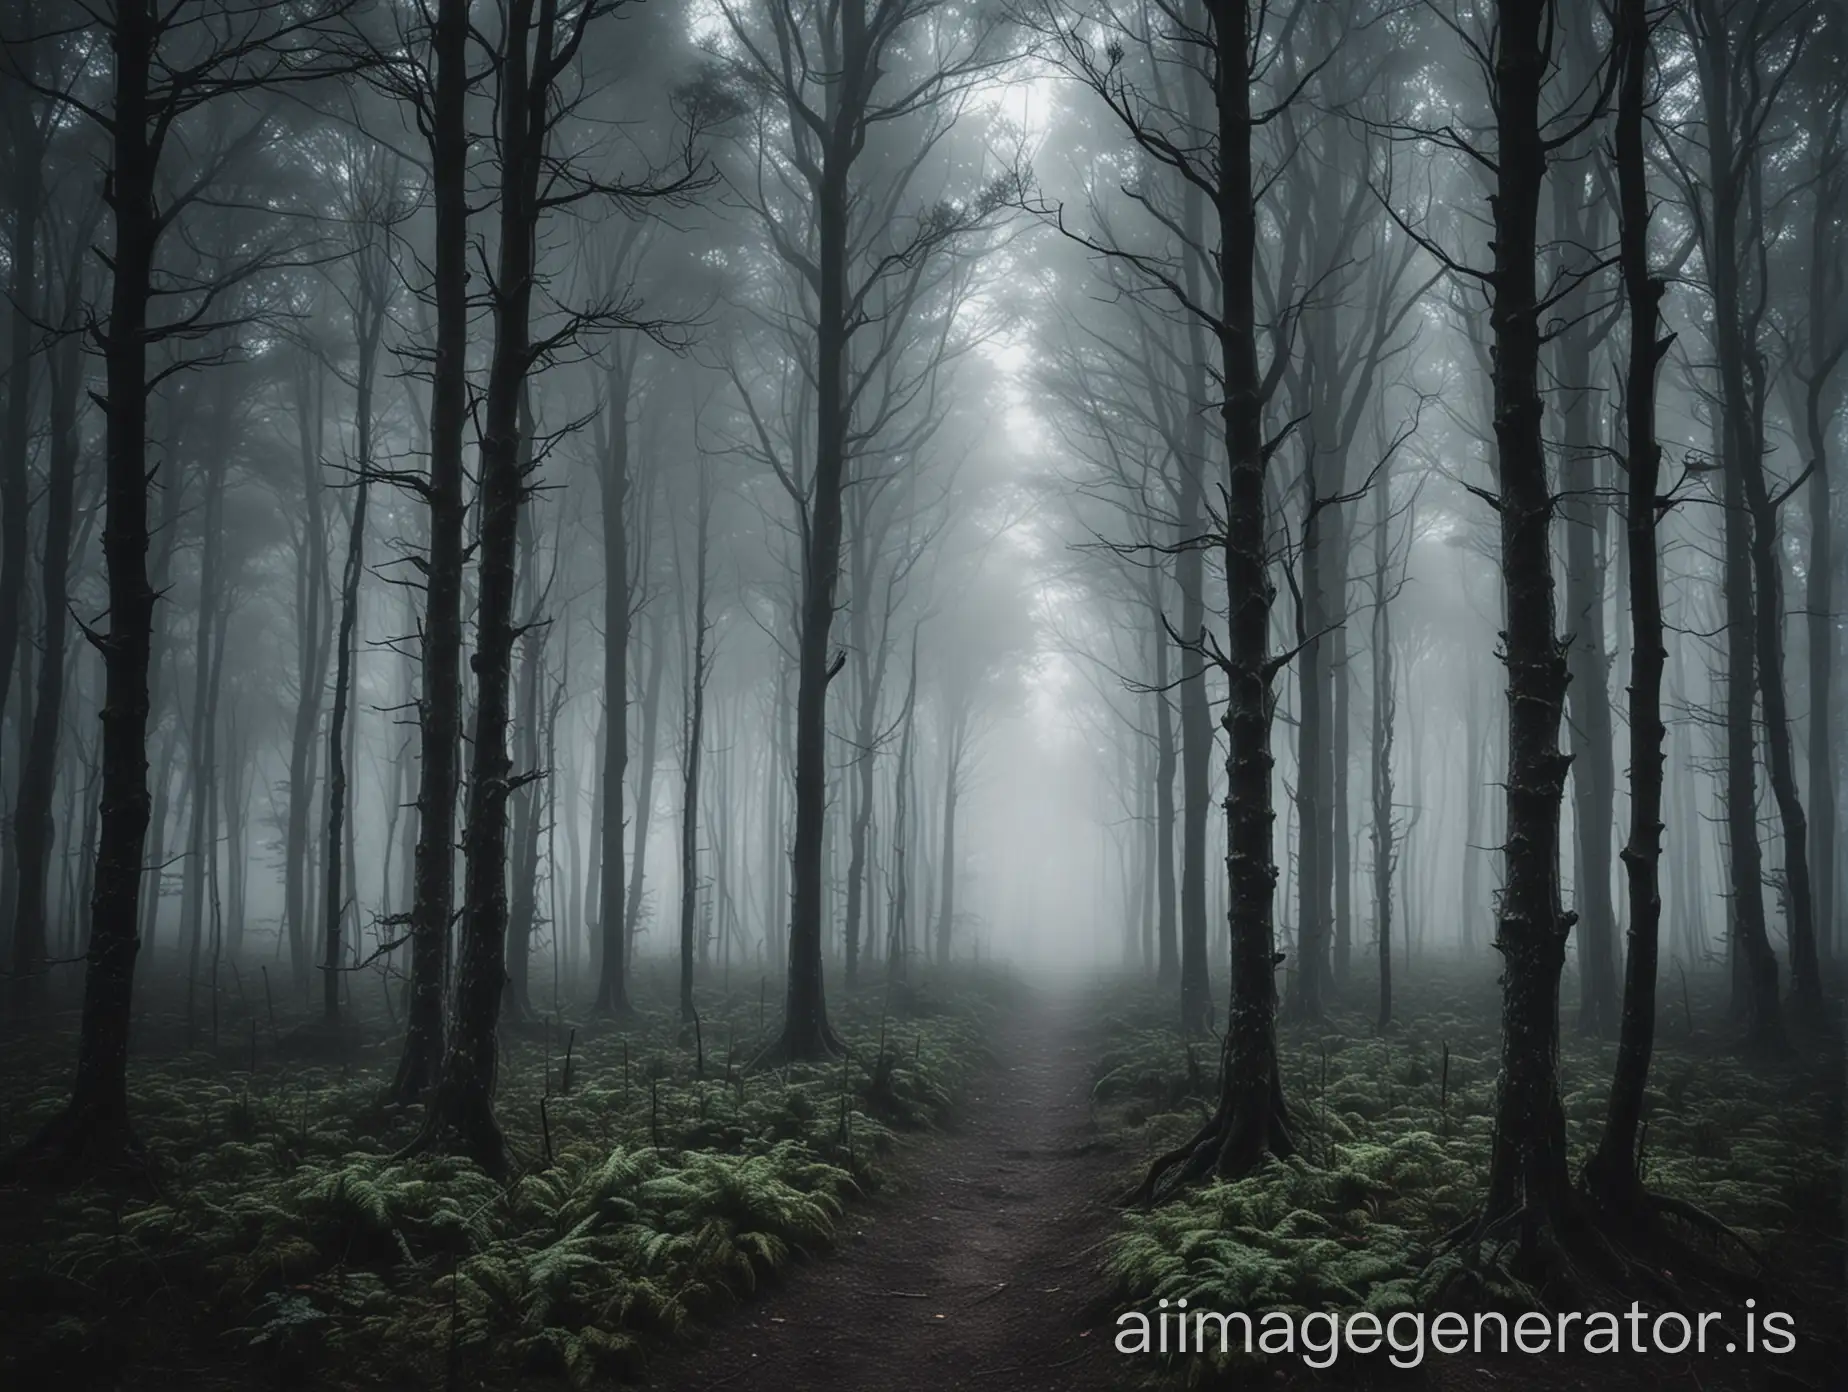 Dark forest with a fog